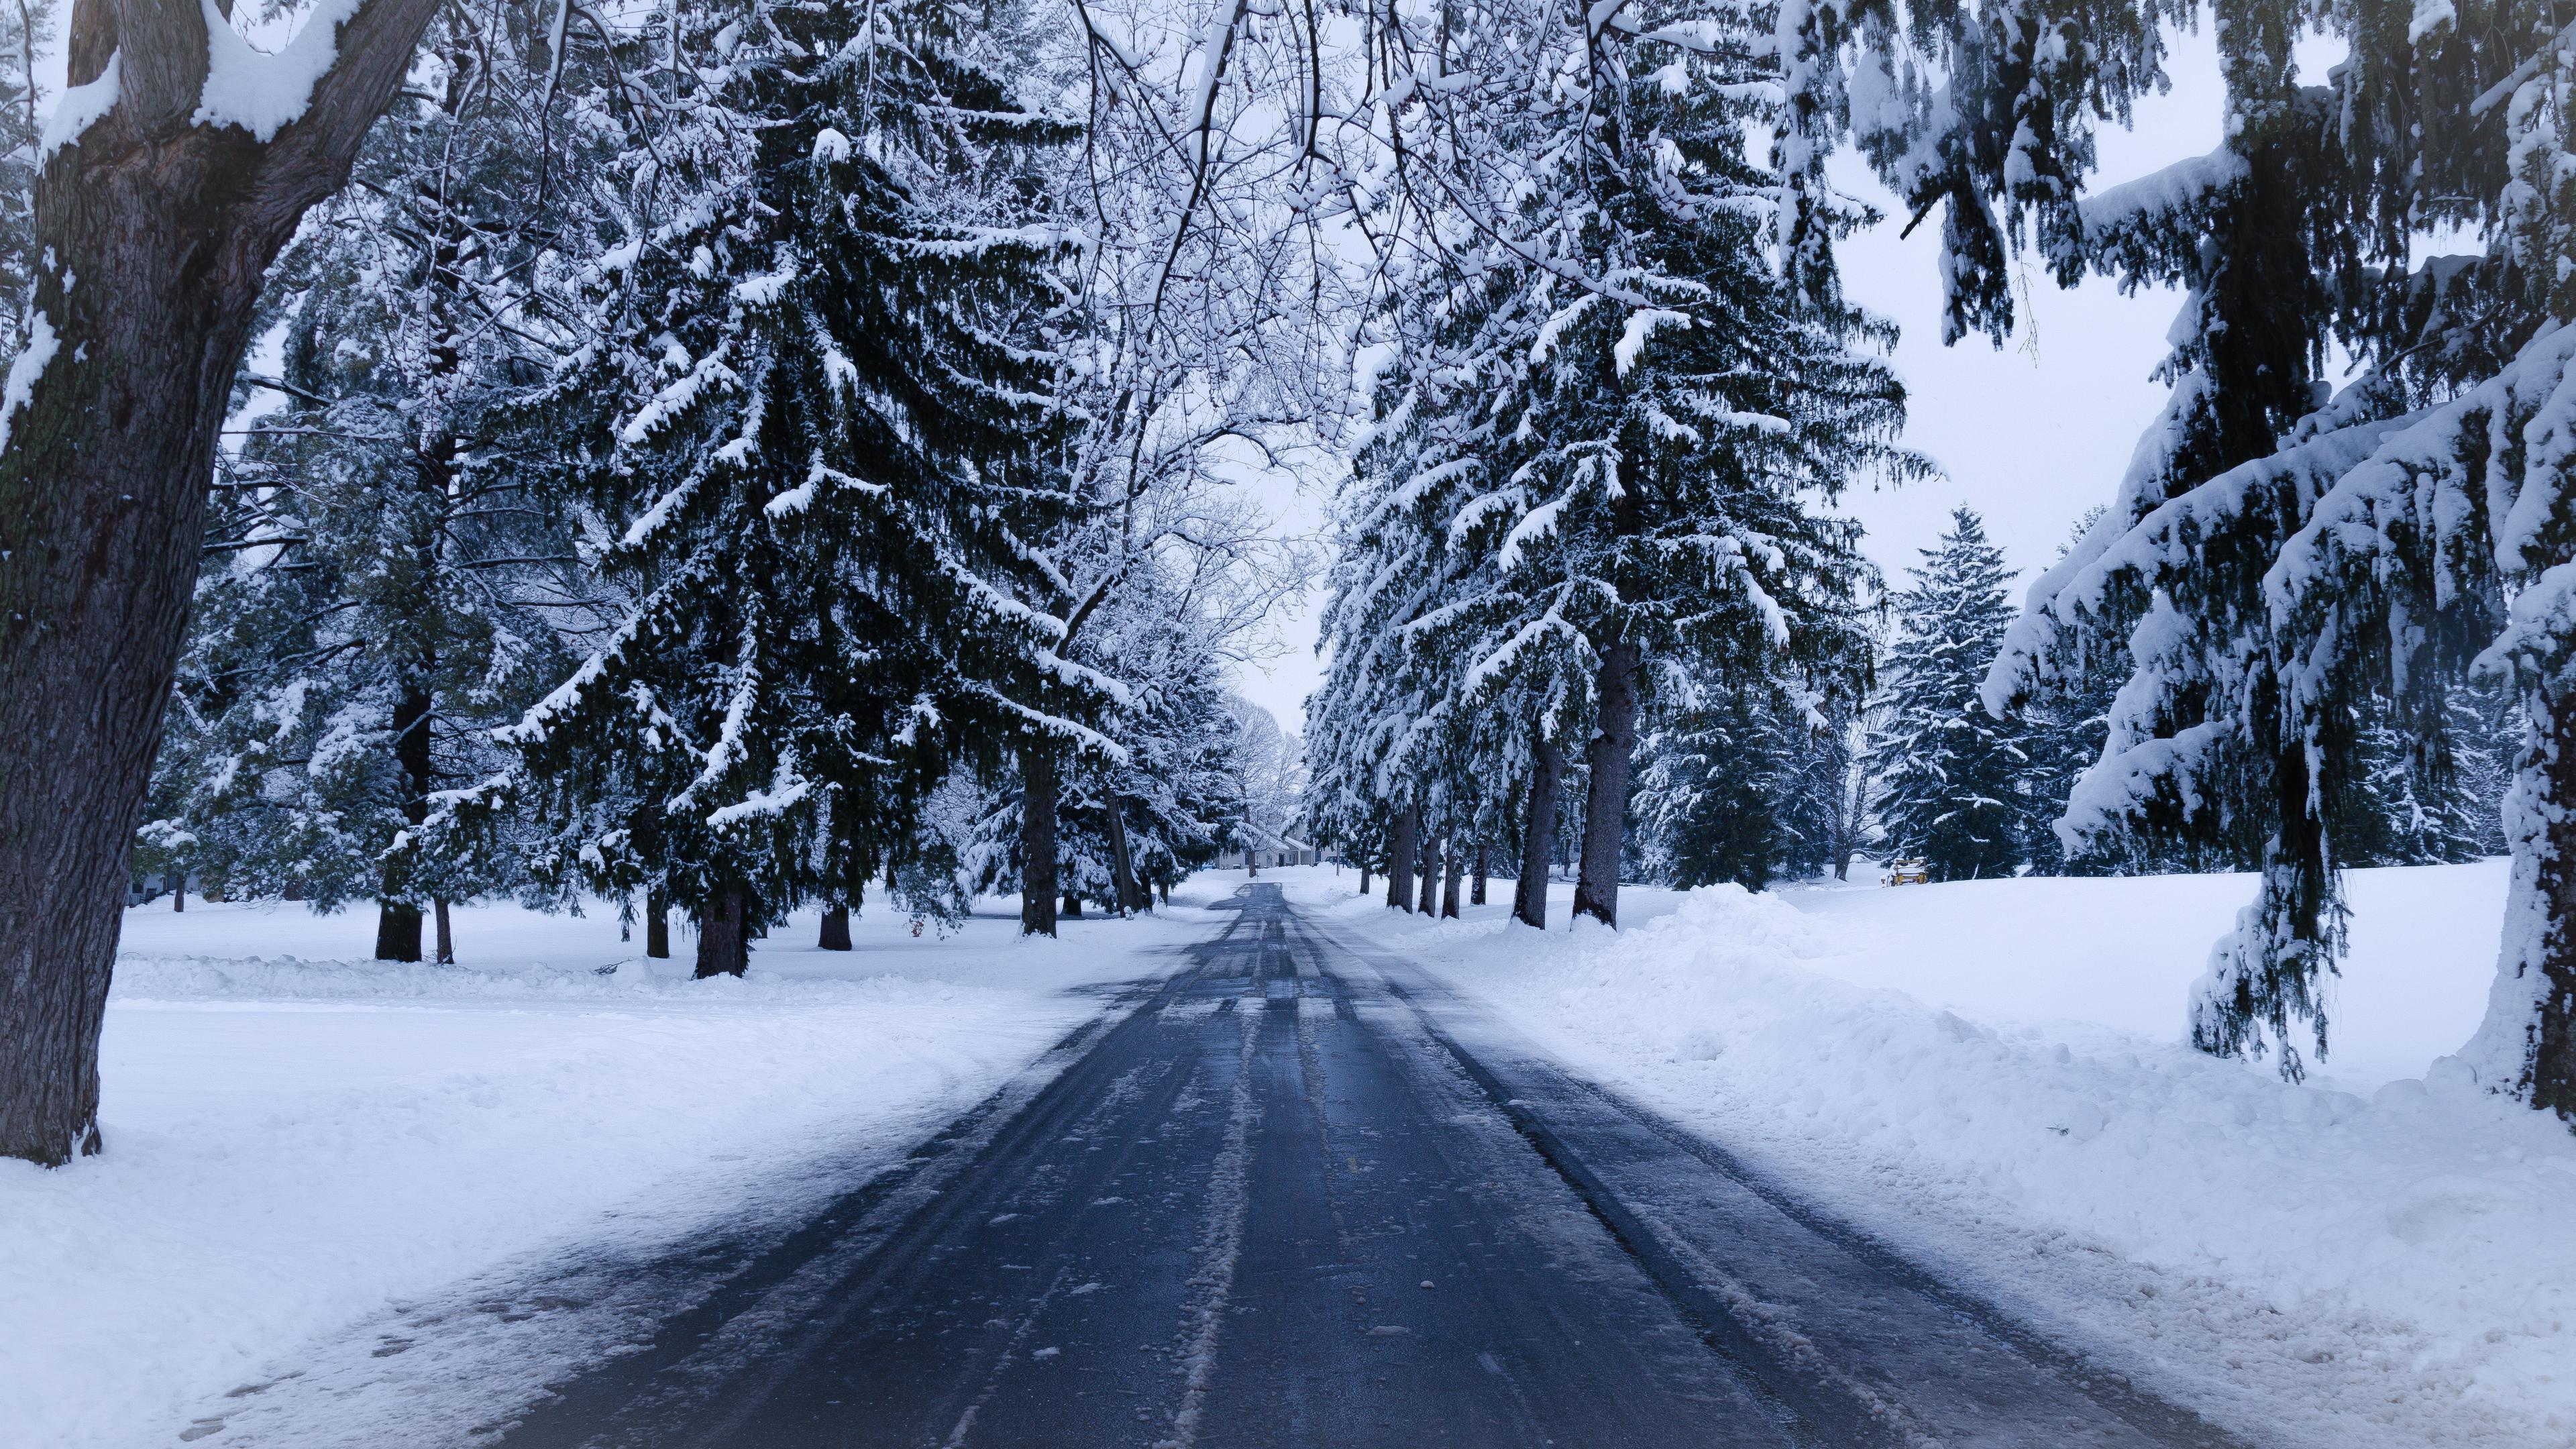 Download wallpaper 3840x2160 winter, road, snow, trees, winter landscape 4k uhd 16:9 HD background